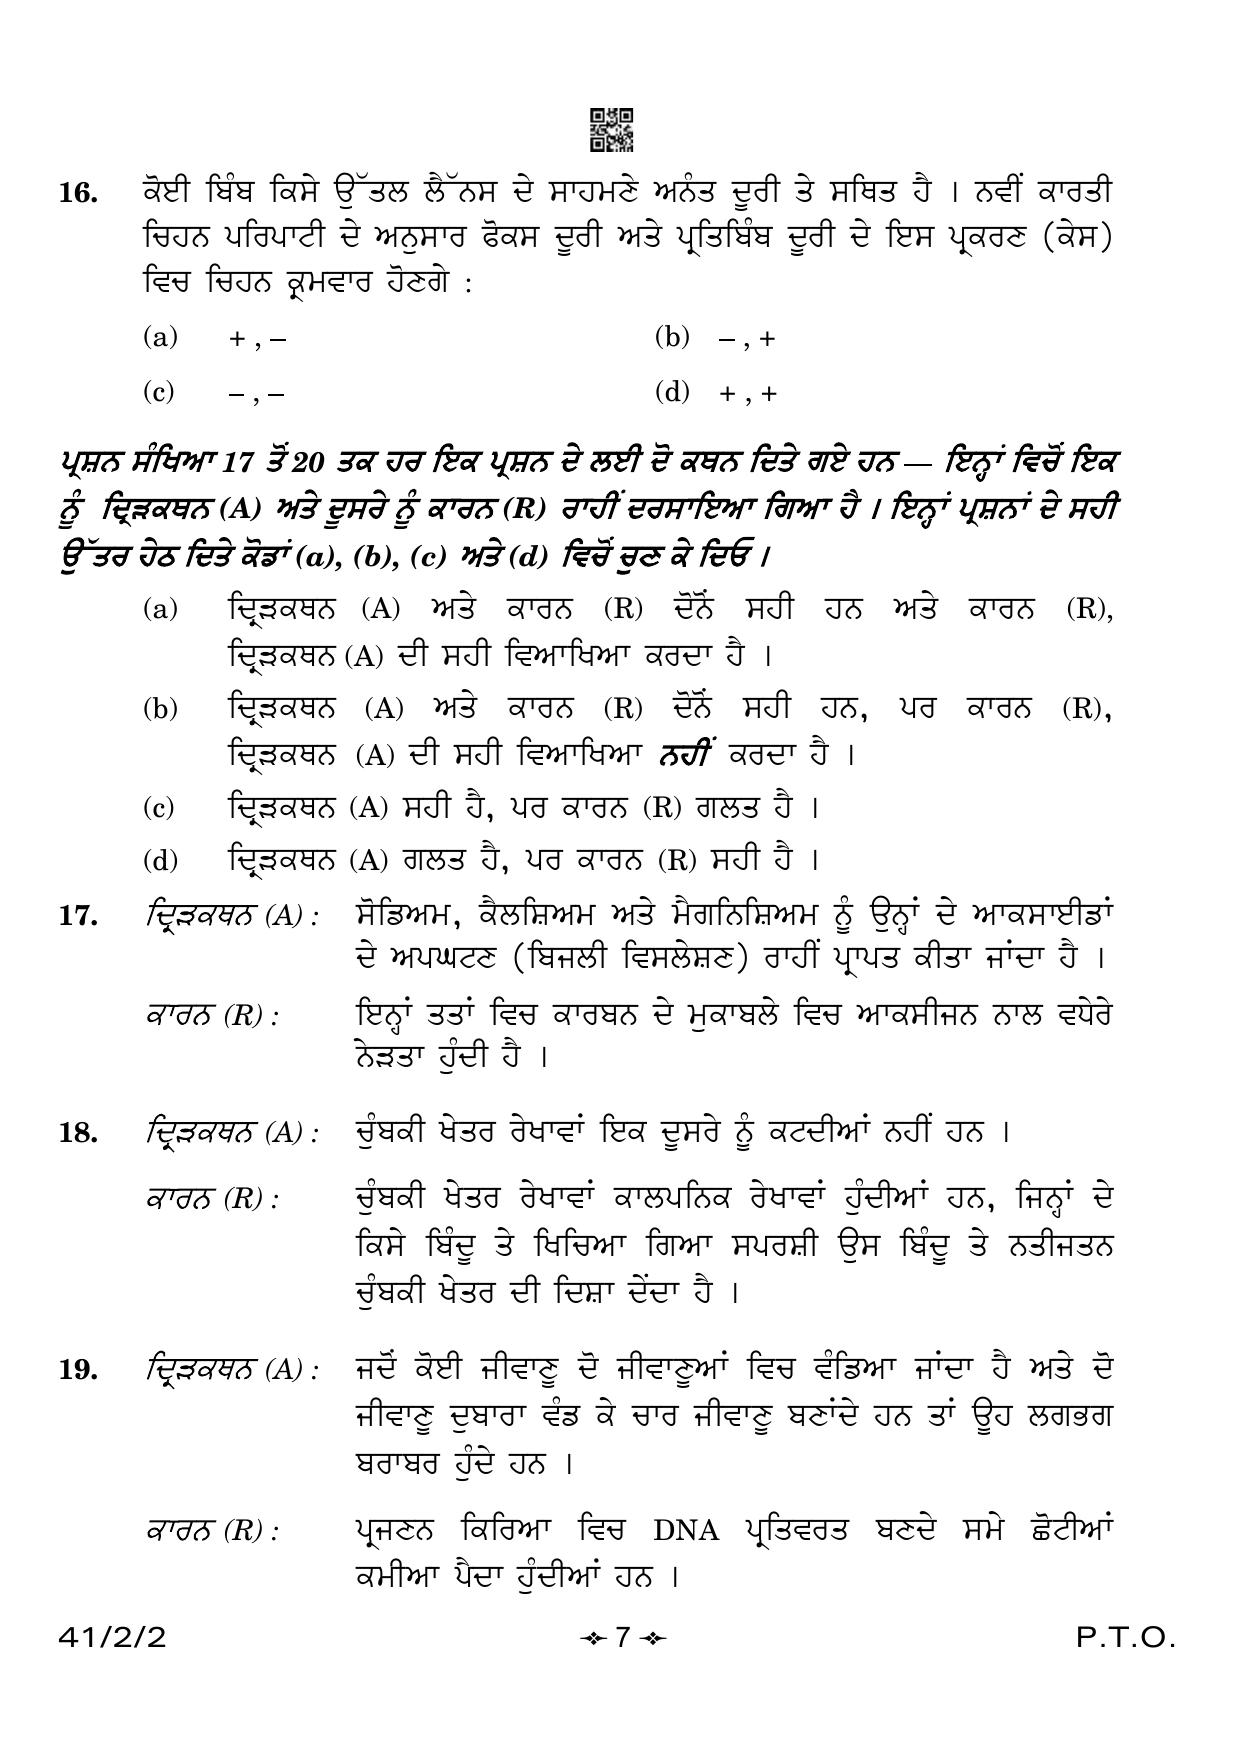 CBSE Class 10 41-2-2 Science Punjabi Version 2023 Question Paper - Page 7